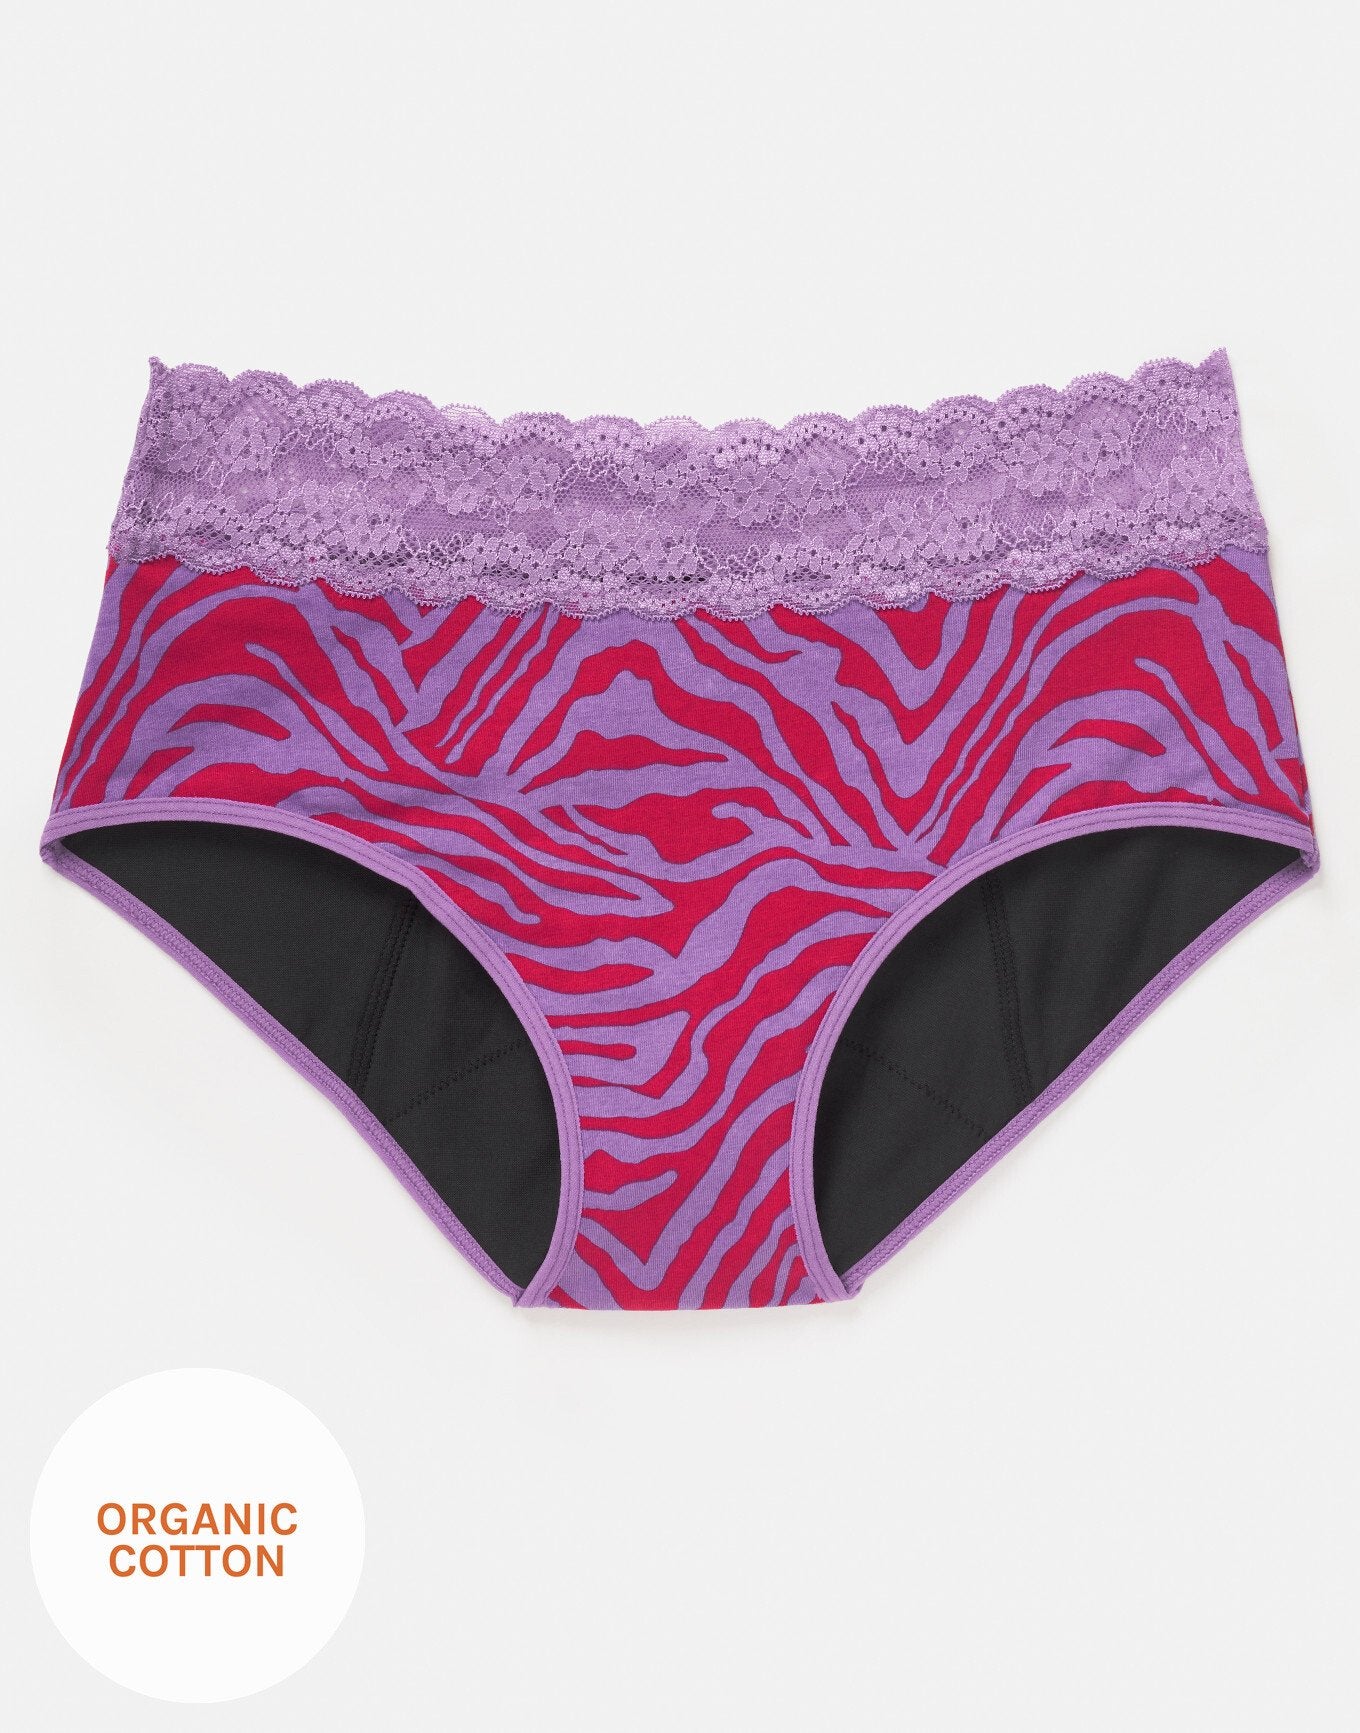 Joyja Ella period-proof panty in color Secret Safari C02 and shape midi brief